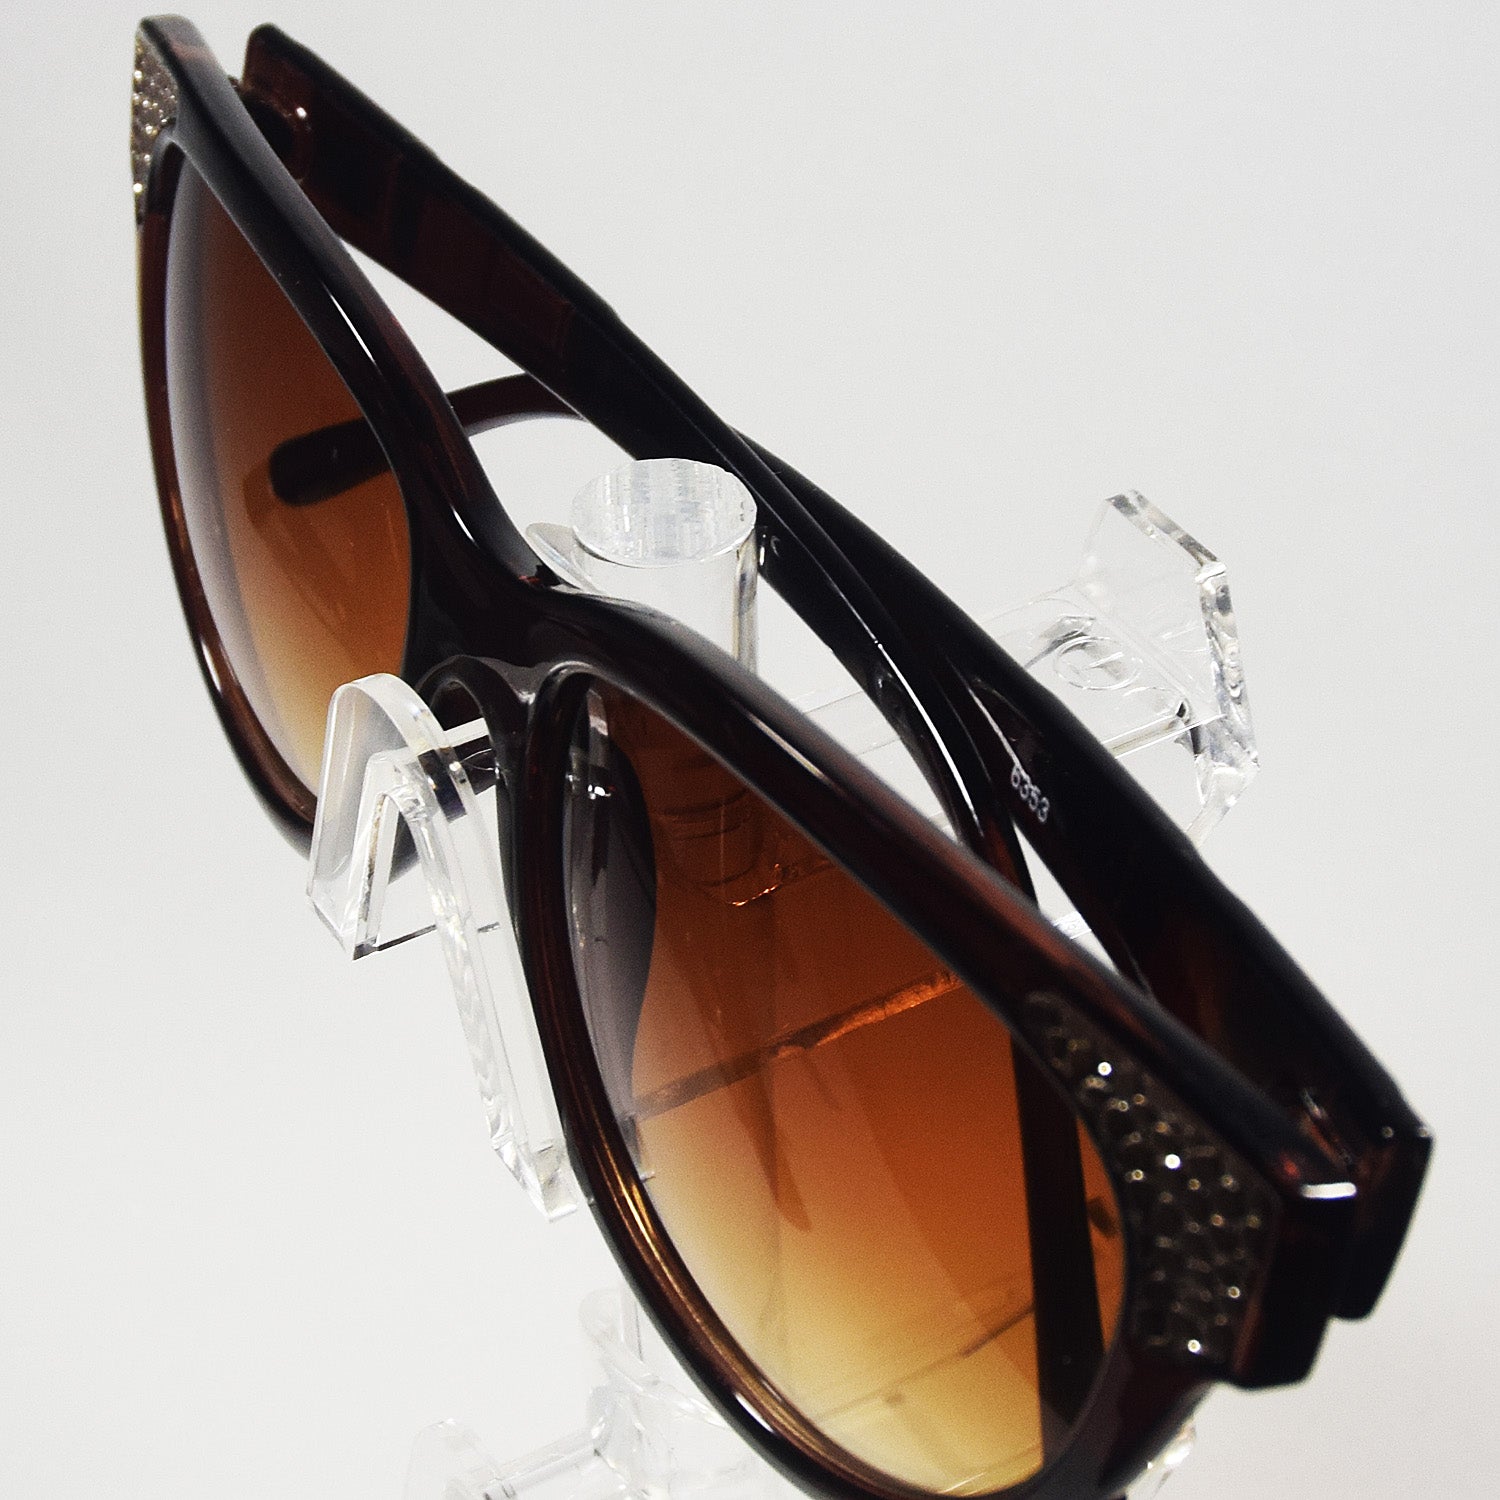 #AC-025x2 Acrylic Eyeglasses Frame Riser 2pcs/set